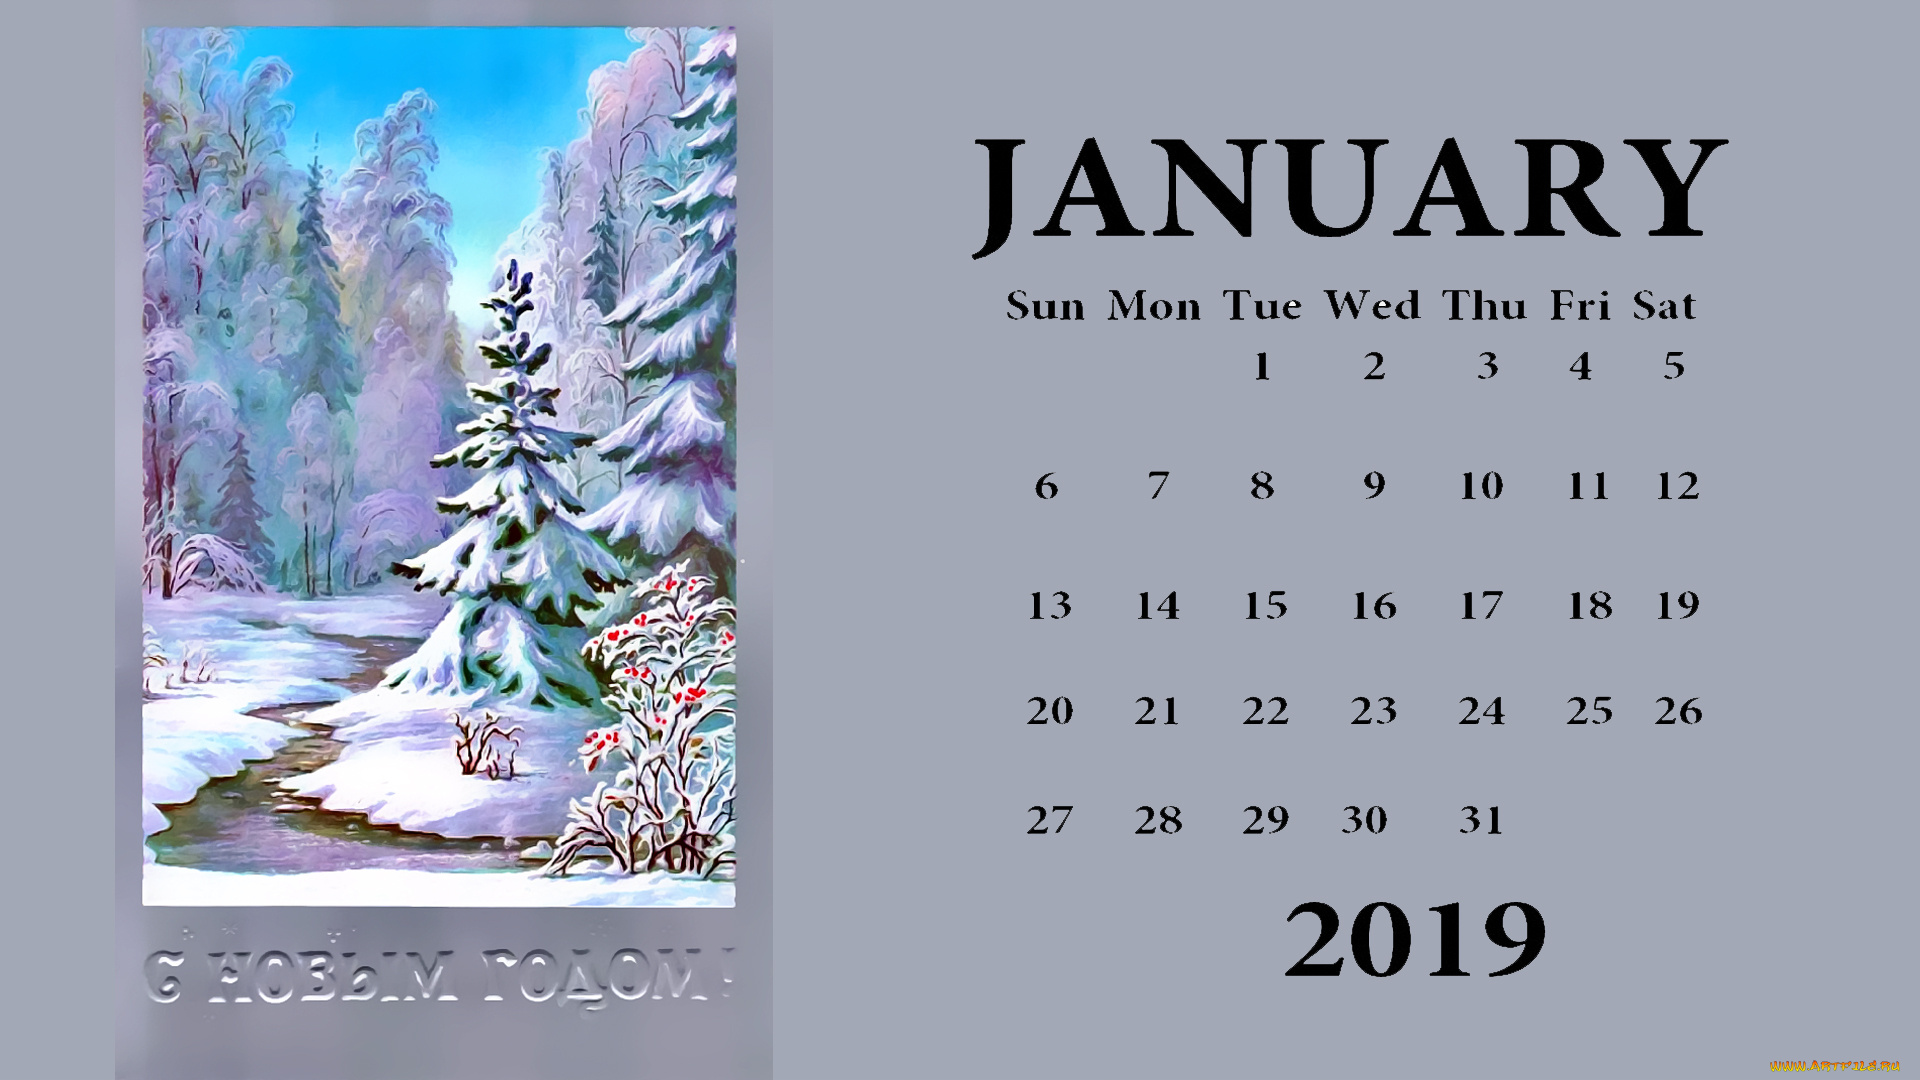 календари, праздники, , салюты, вода, зима, деревья, елка, снег